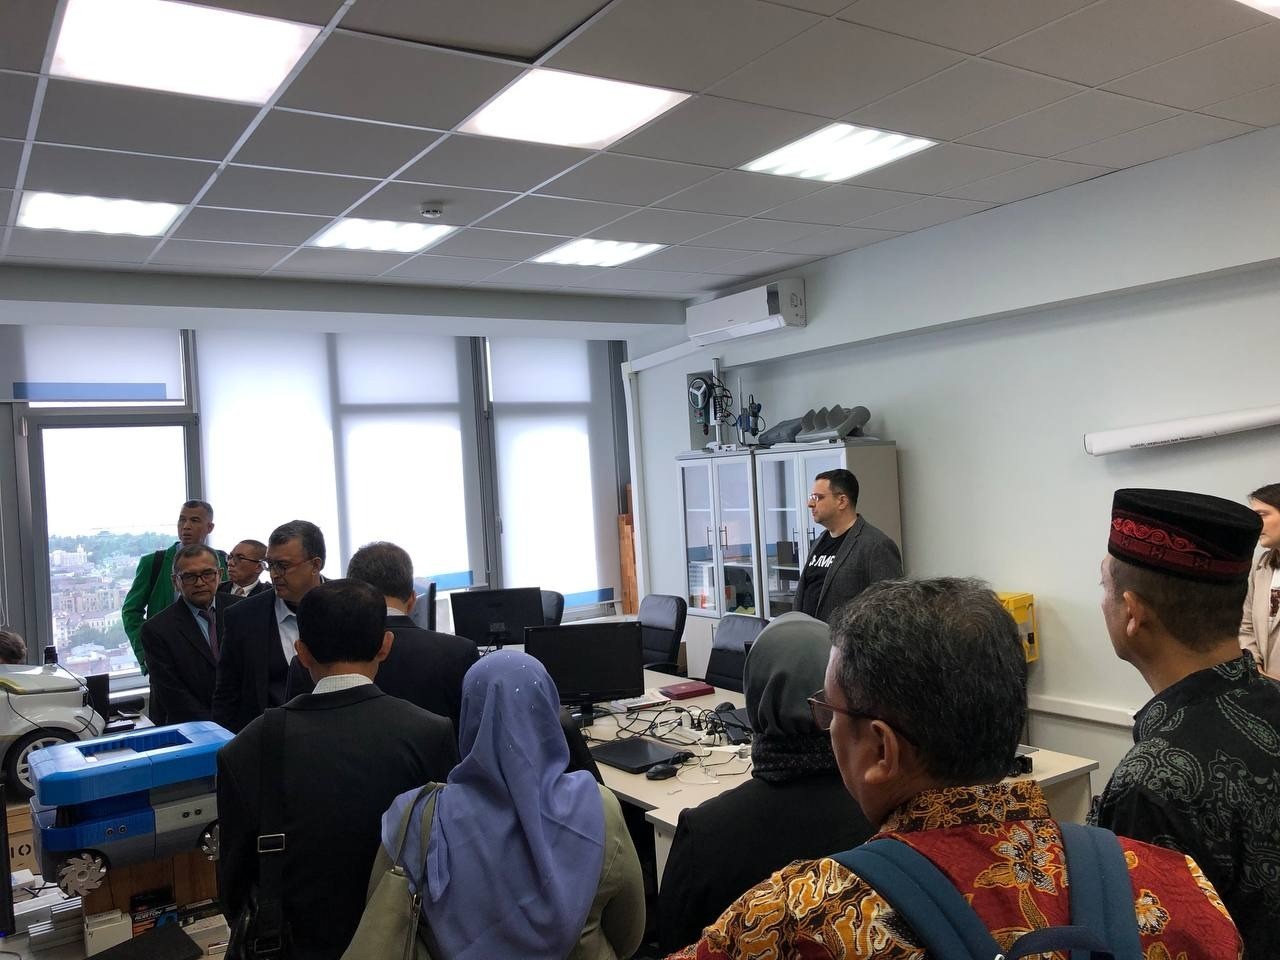 Delegation from Indonesia visited Laboratory of Intelligent Robotics Systems ,ITIS, LIRS, robotics